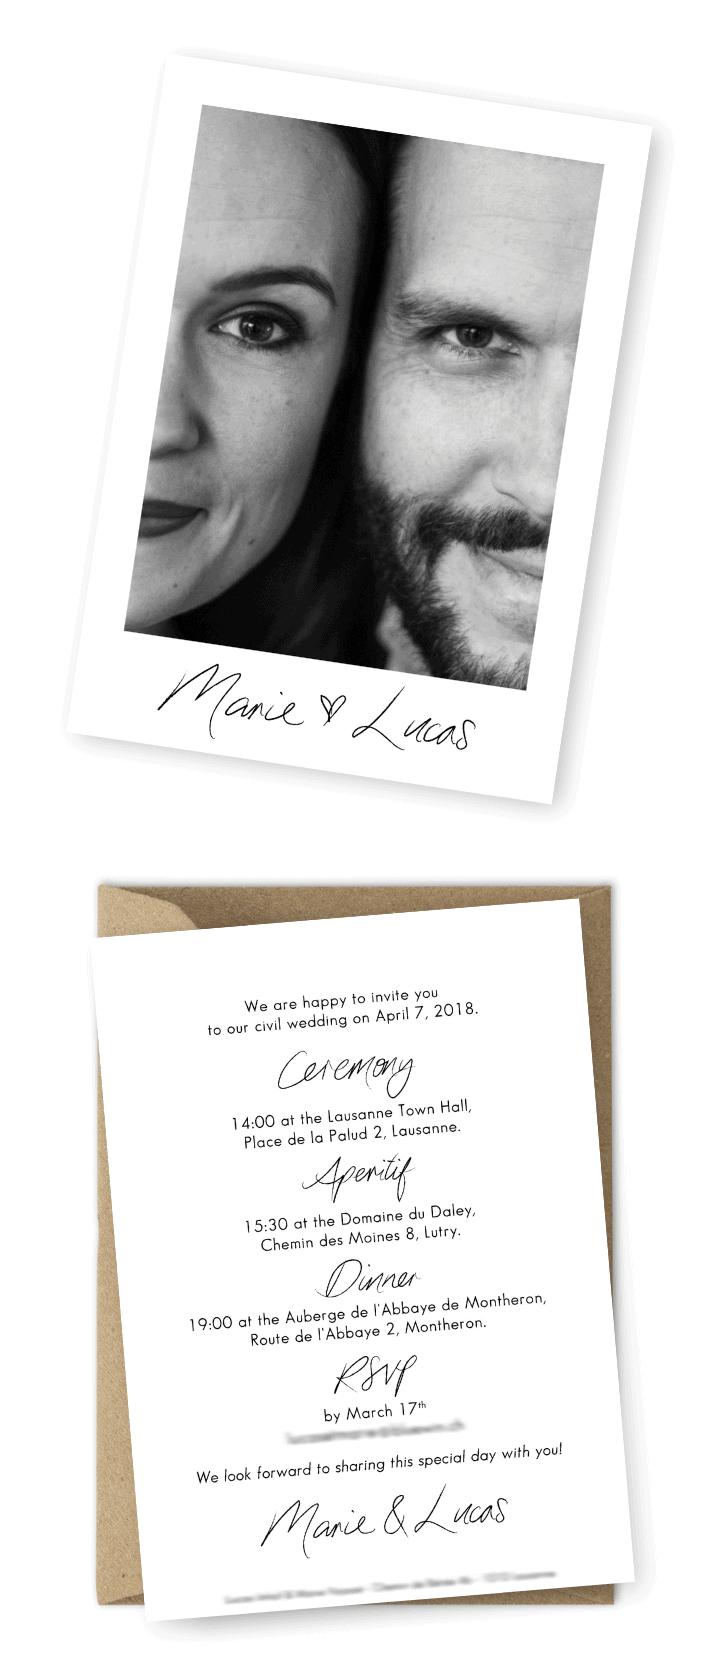 Minimalistic Wedding Invitations Modern Simple Wedding Invites For the Love of Stationery David Saltiel Photography